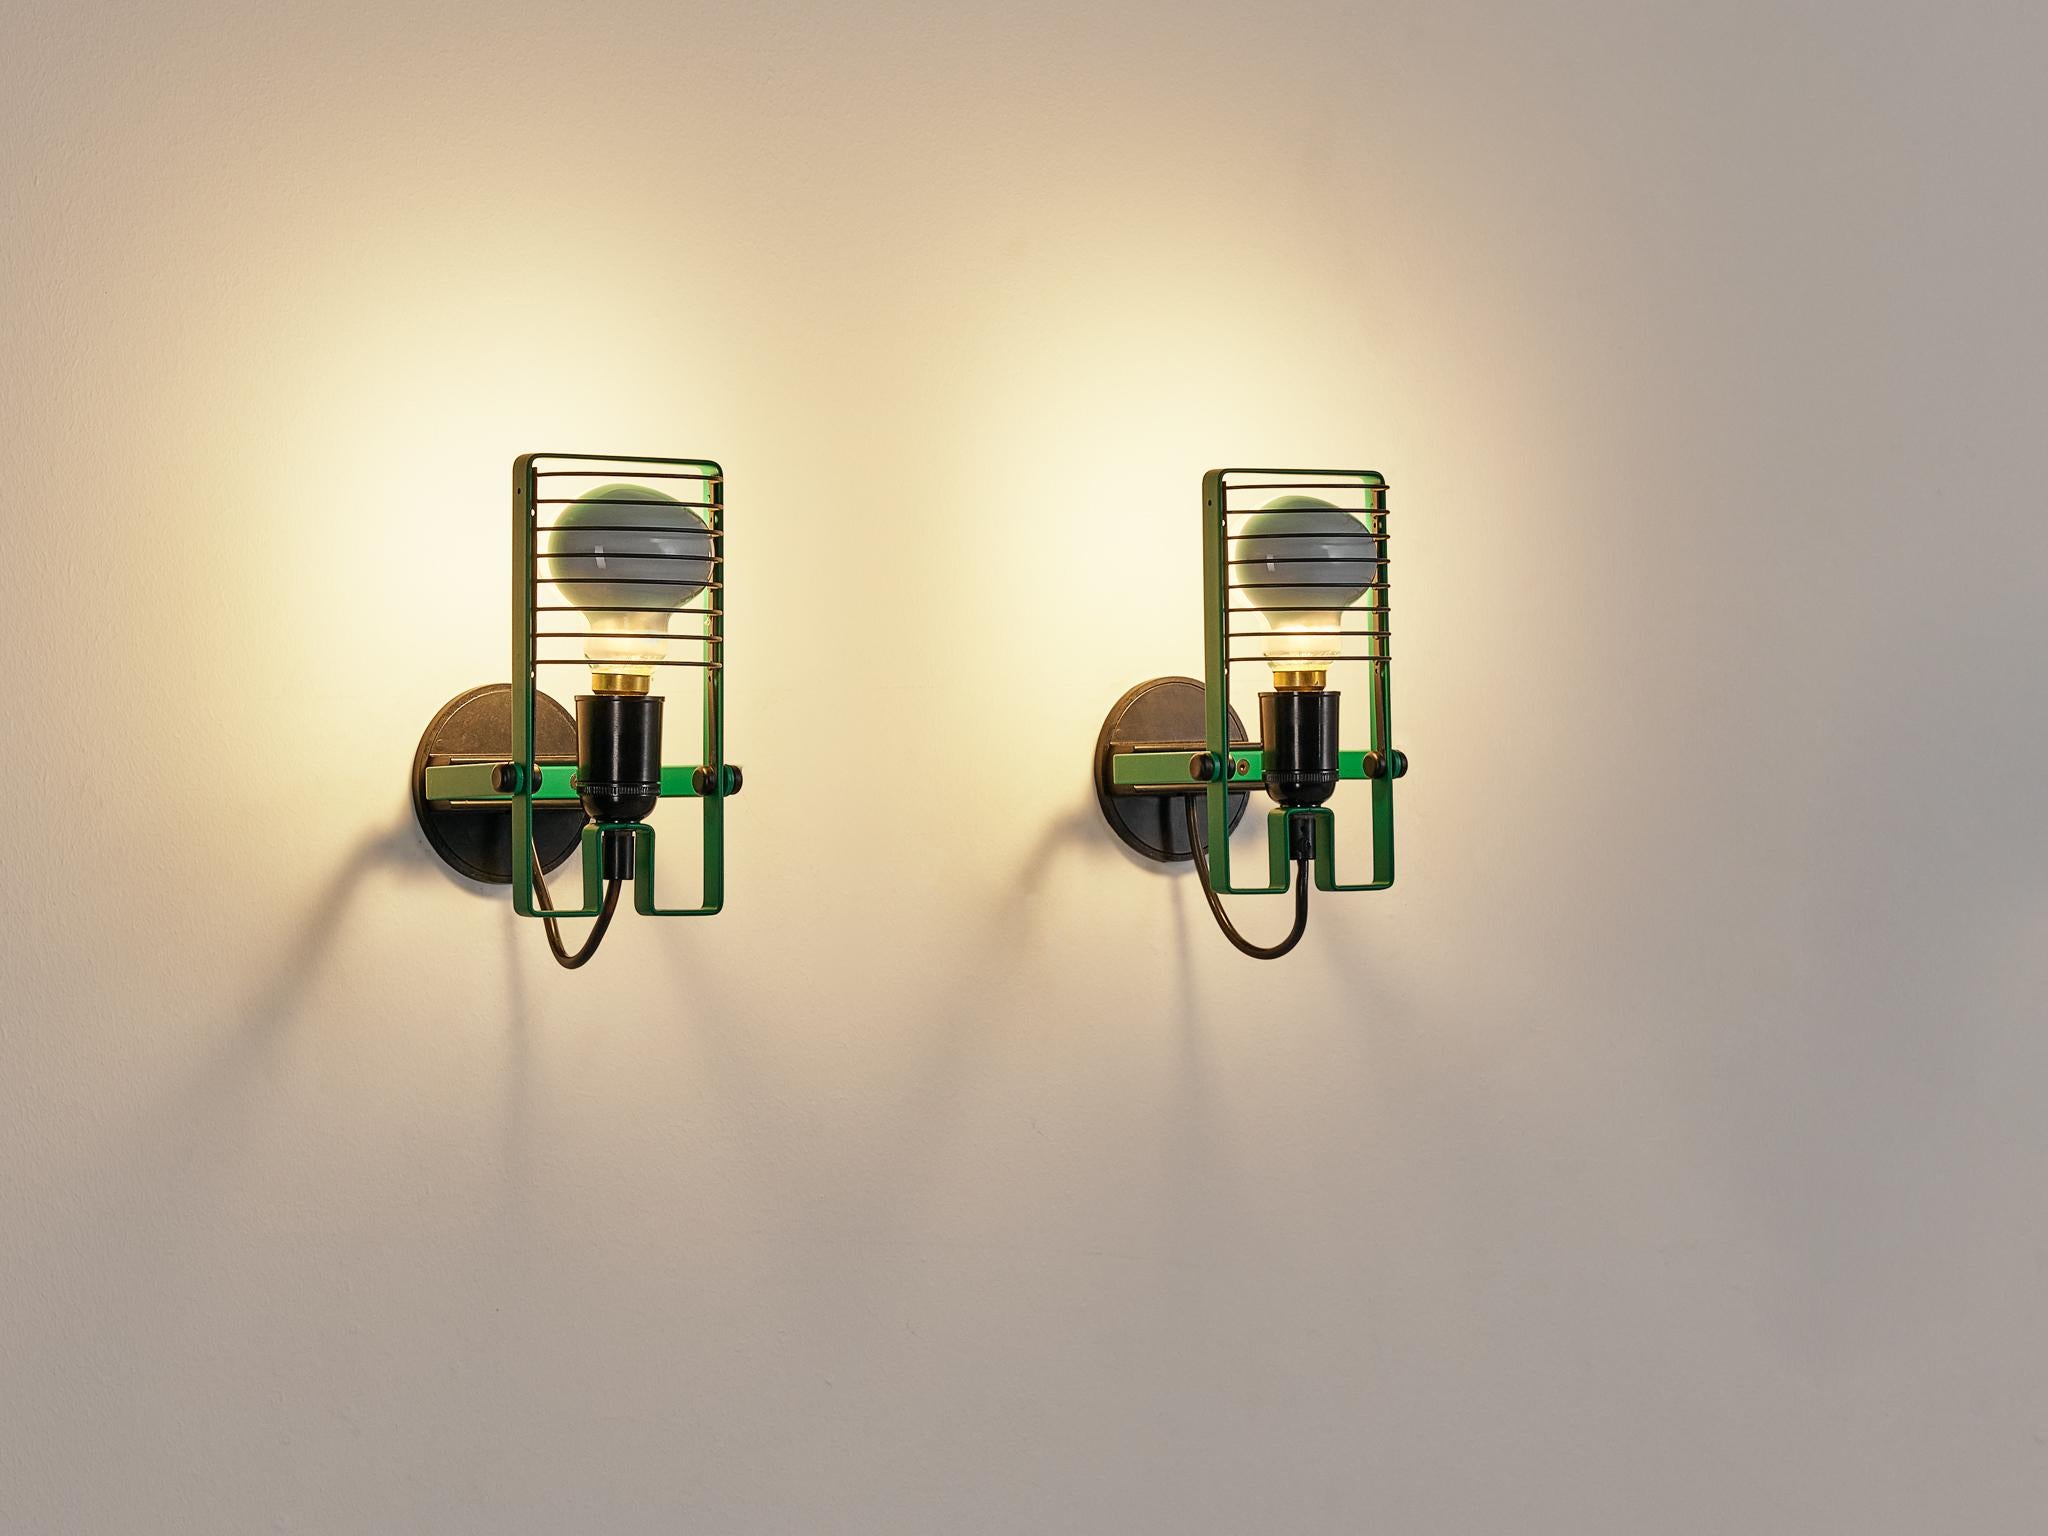 Ernesto Gismondi for Artemide 'Sintesi Faretto' Wall Lights in Green 1